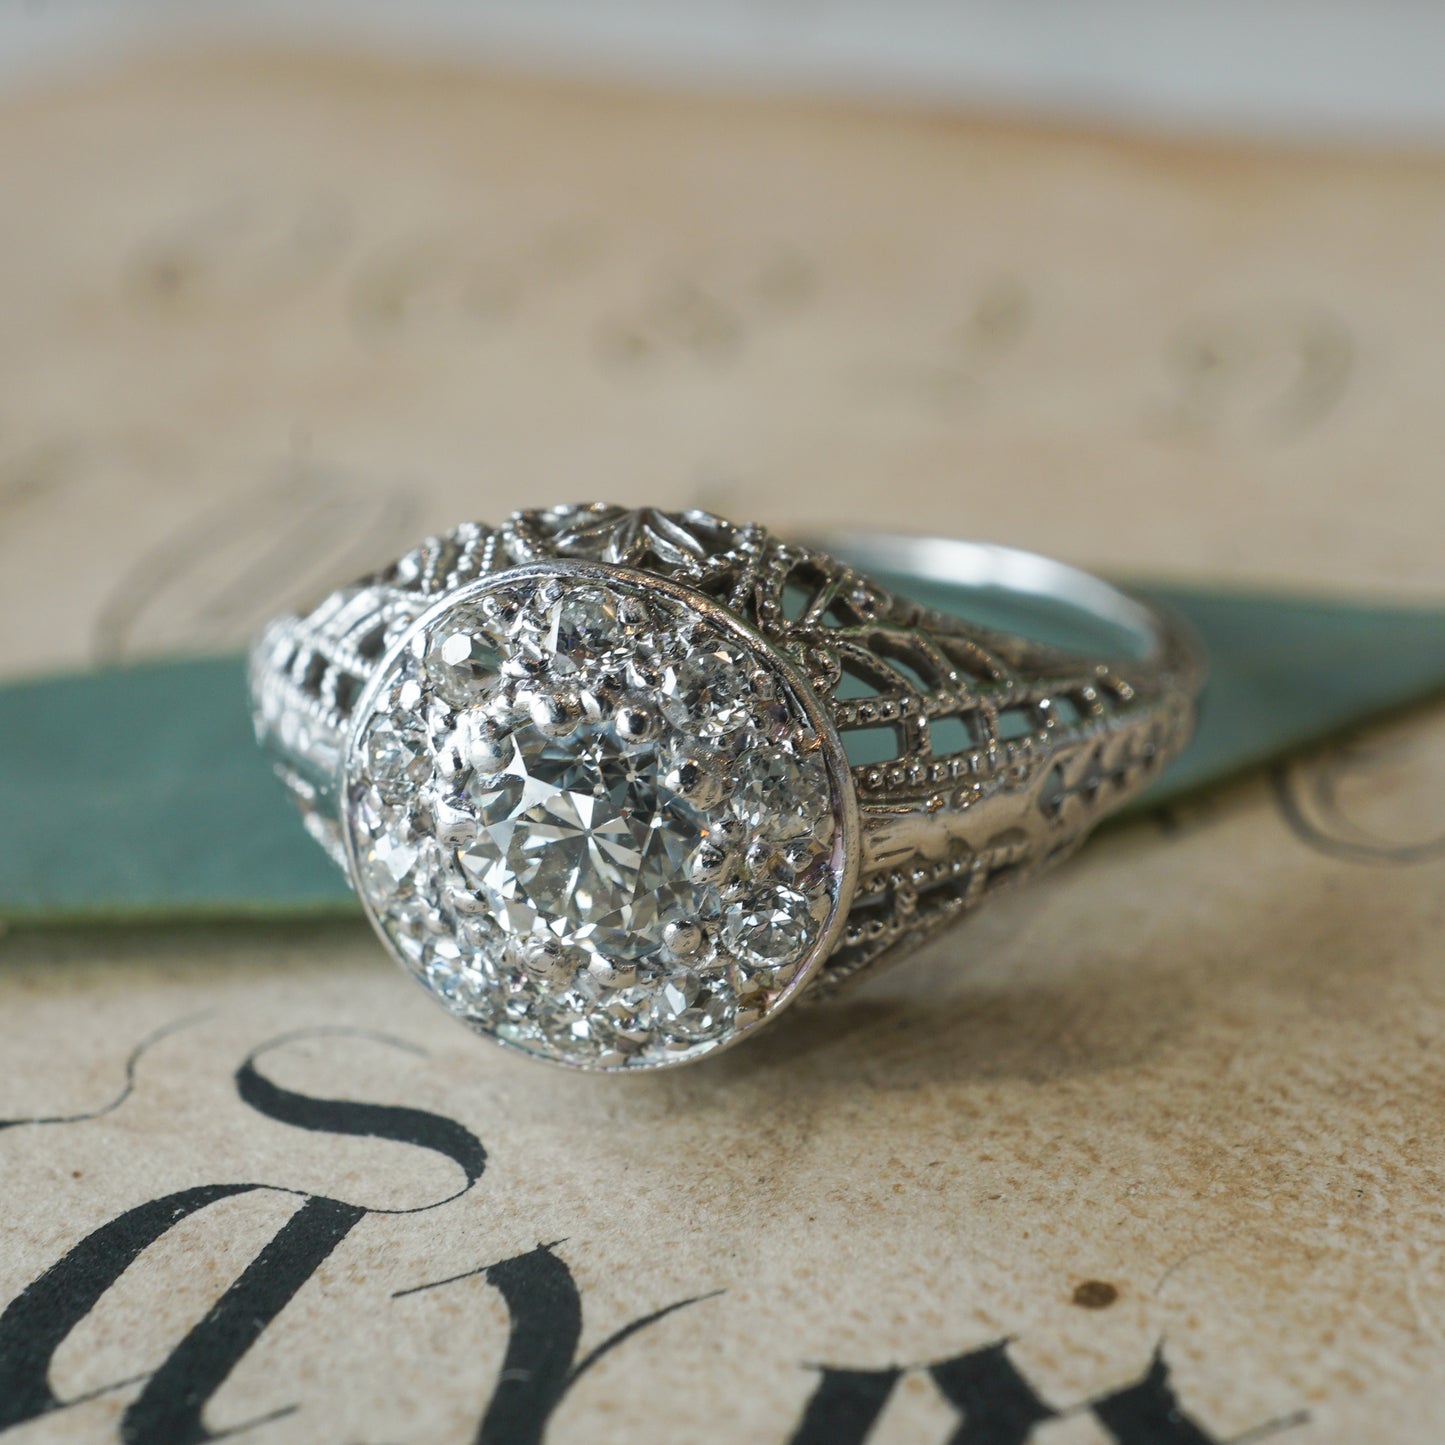 Pave Diamond Filigree Engagement Ring in 18k White Gold